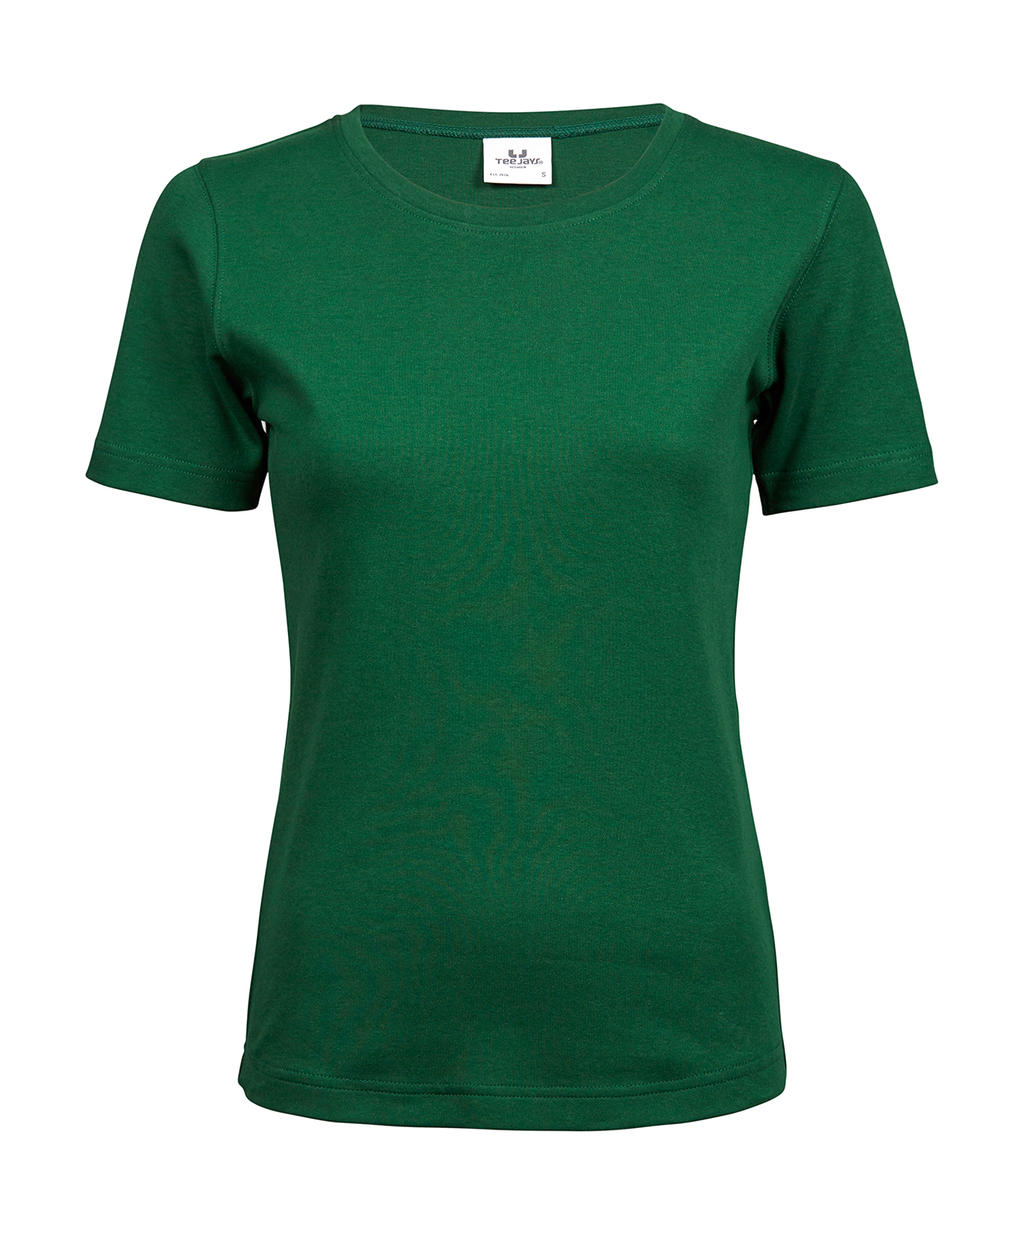  Ladies Interlock T-Shirt in Farbe Forest Green